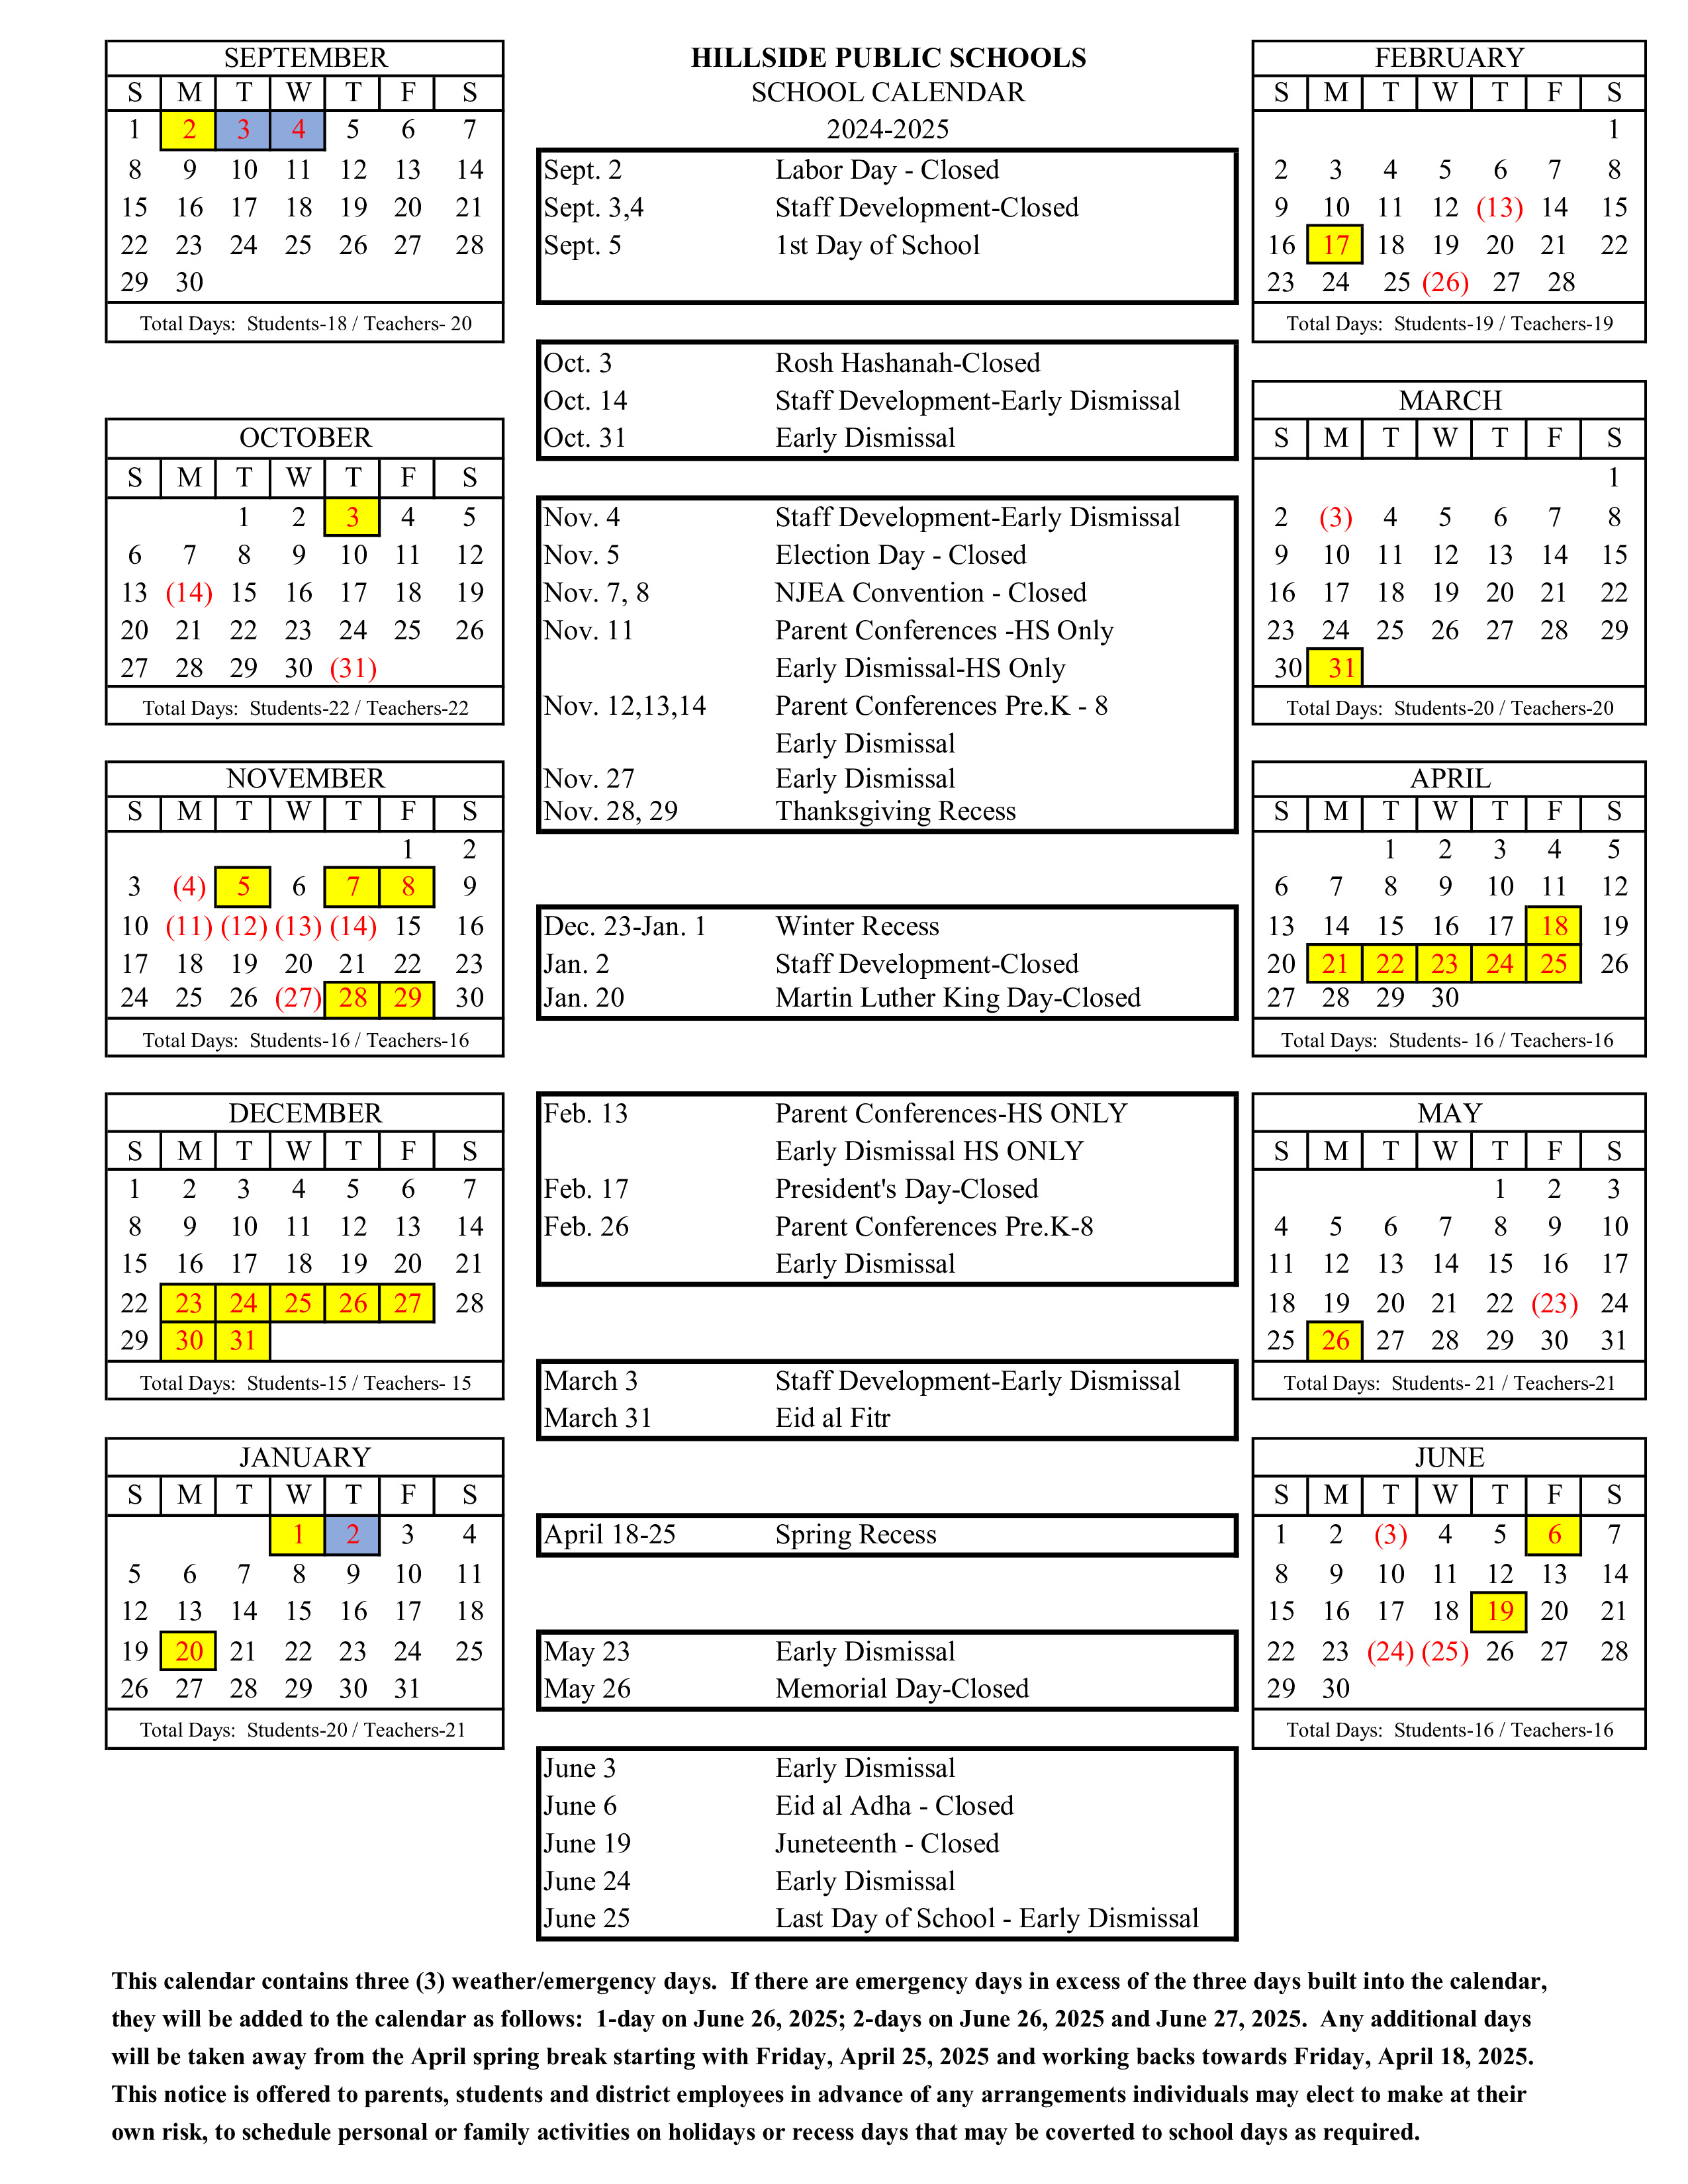 District Calendar 2024 - 2025